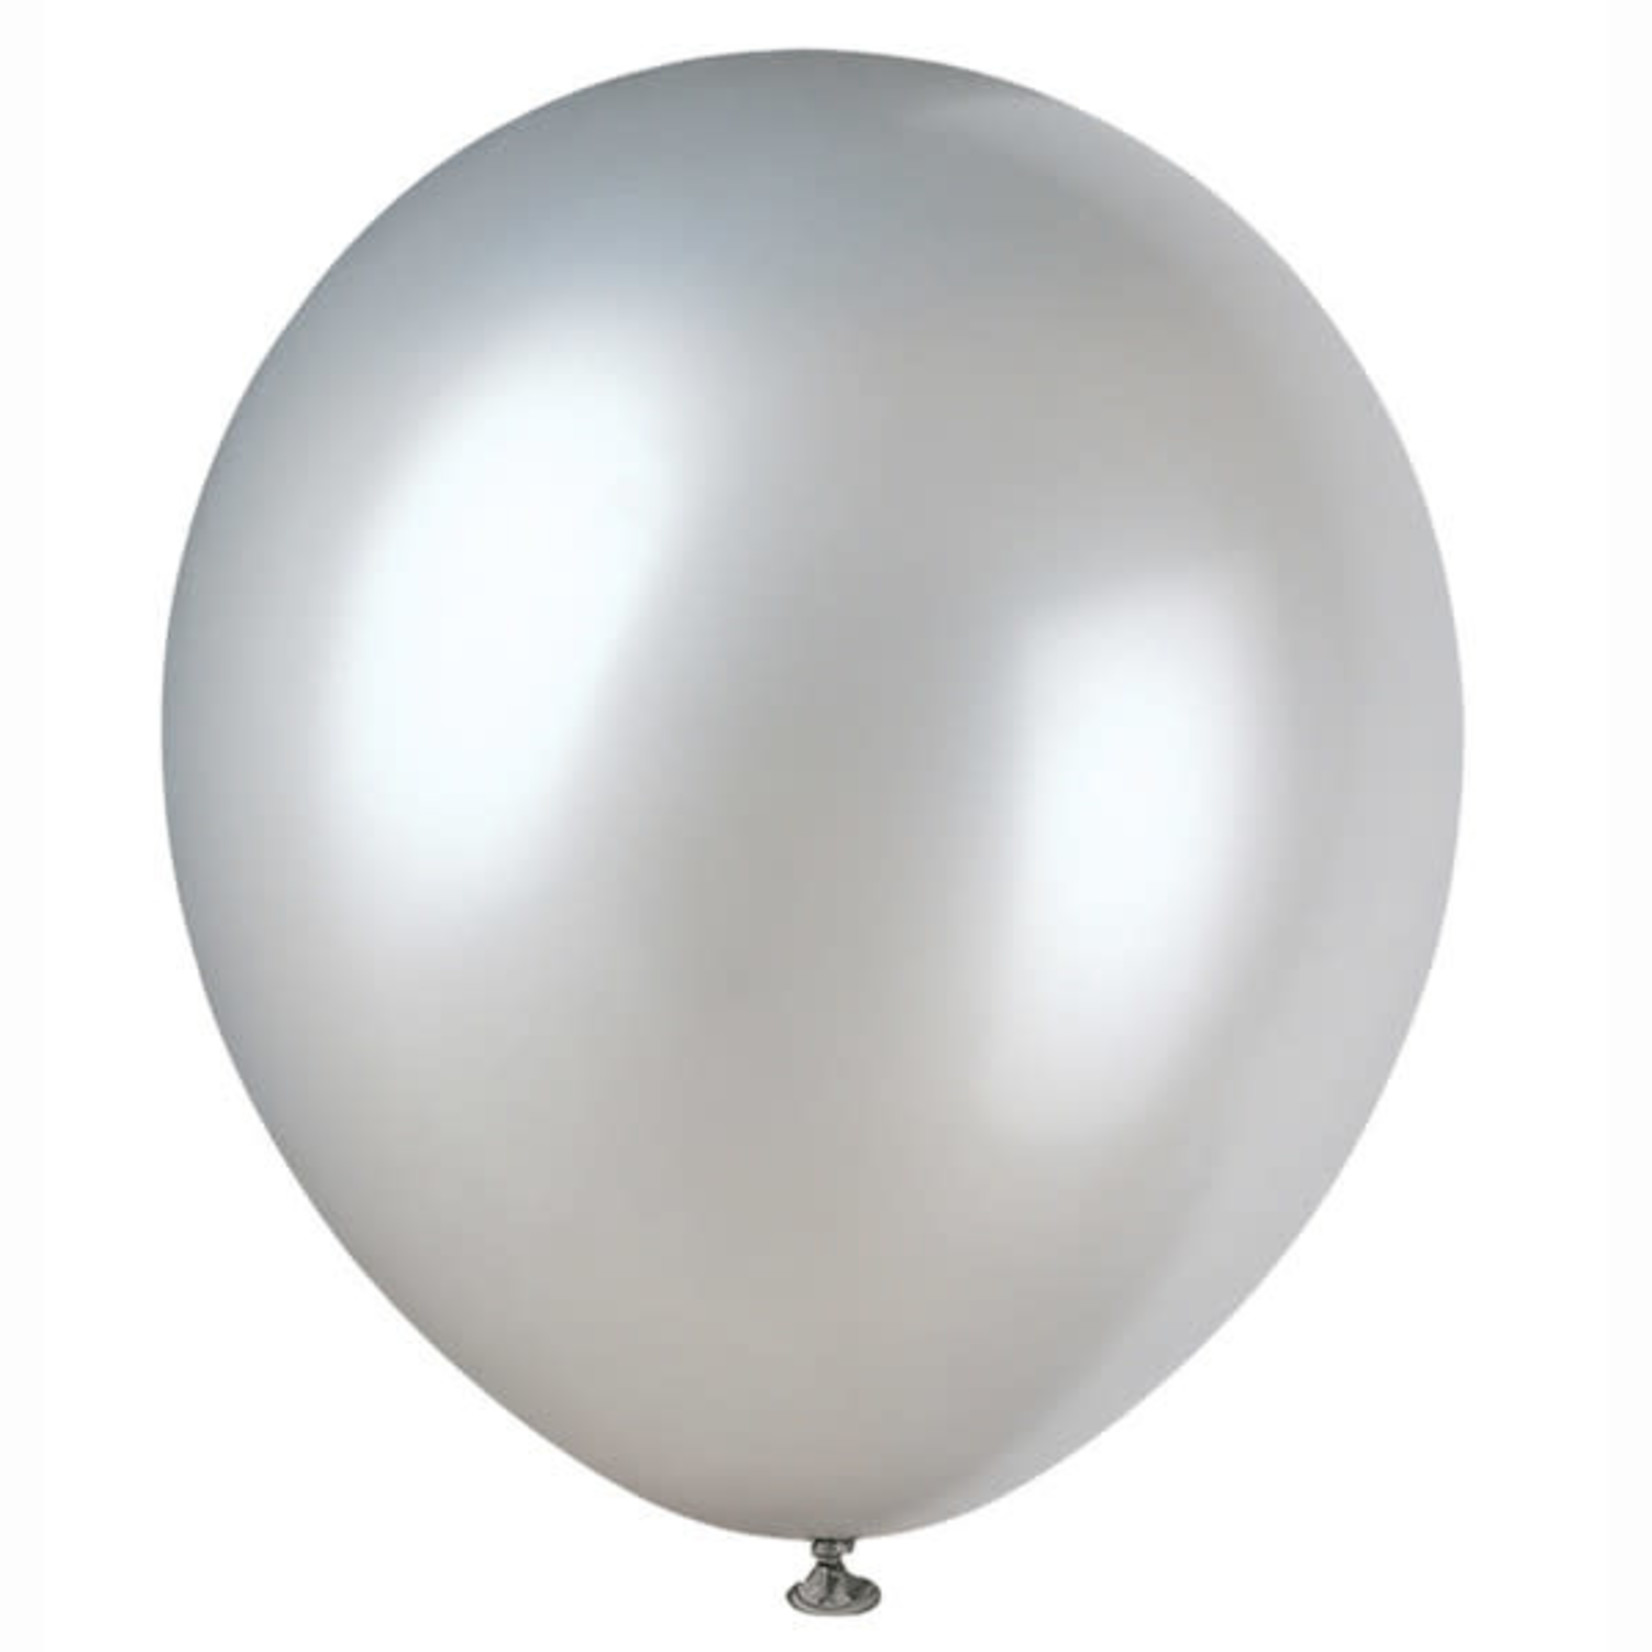 72  12"" Pearl Balloons - Silver, reg $9.99